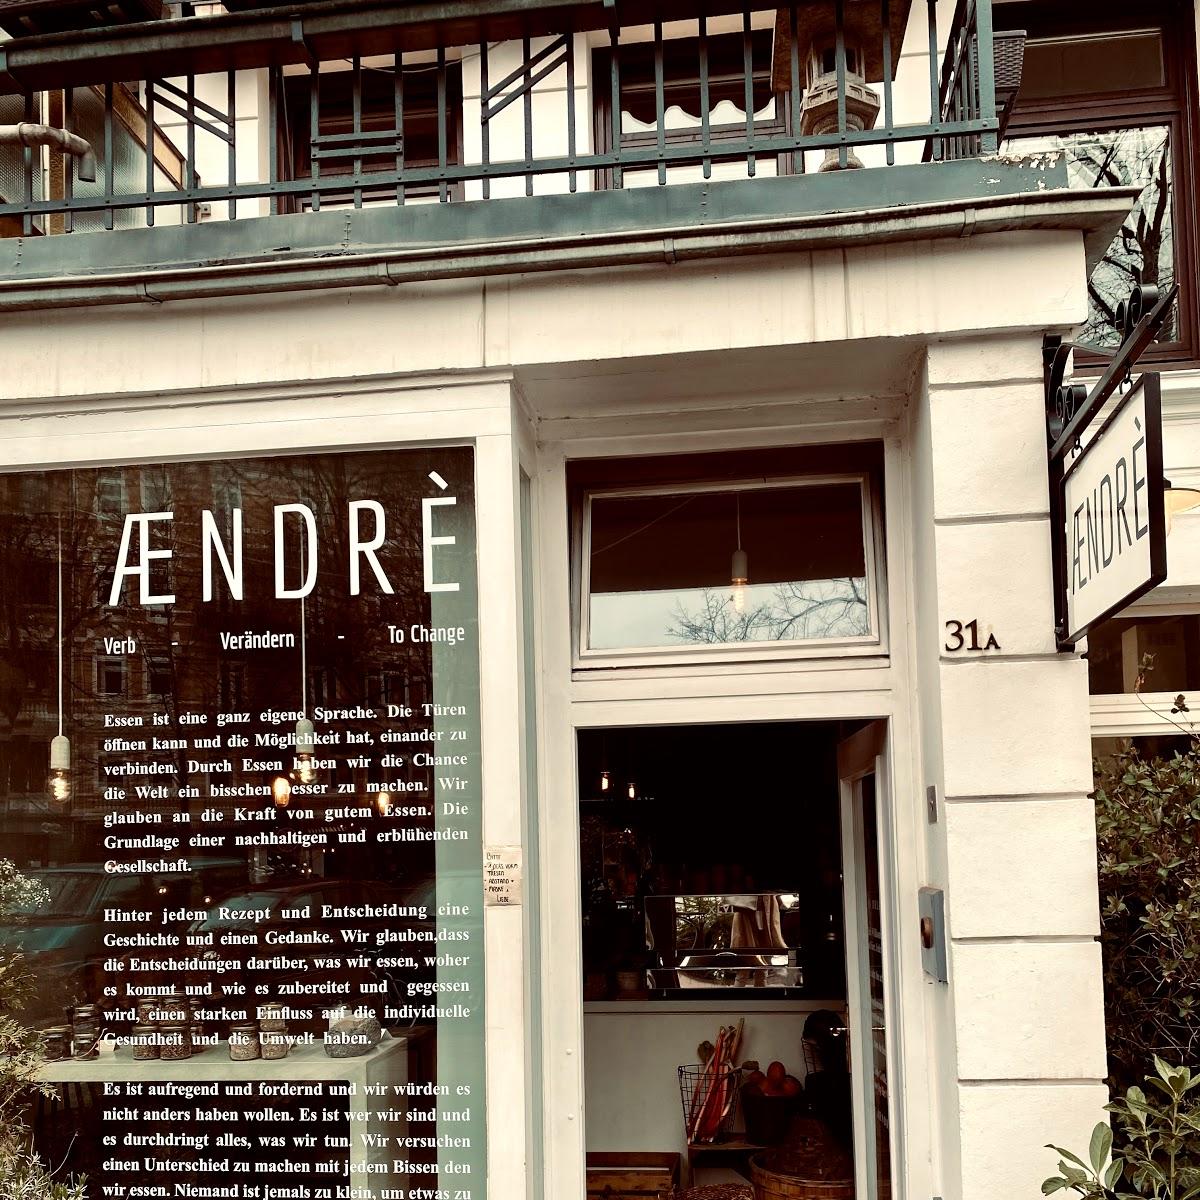 Restaurant "ÆNDRÈ" in Hamburg